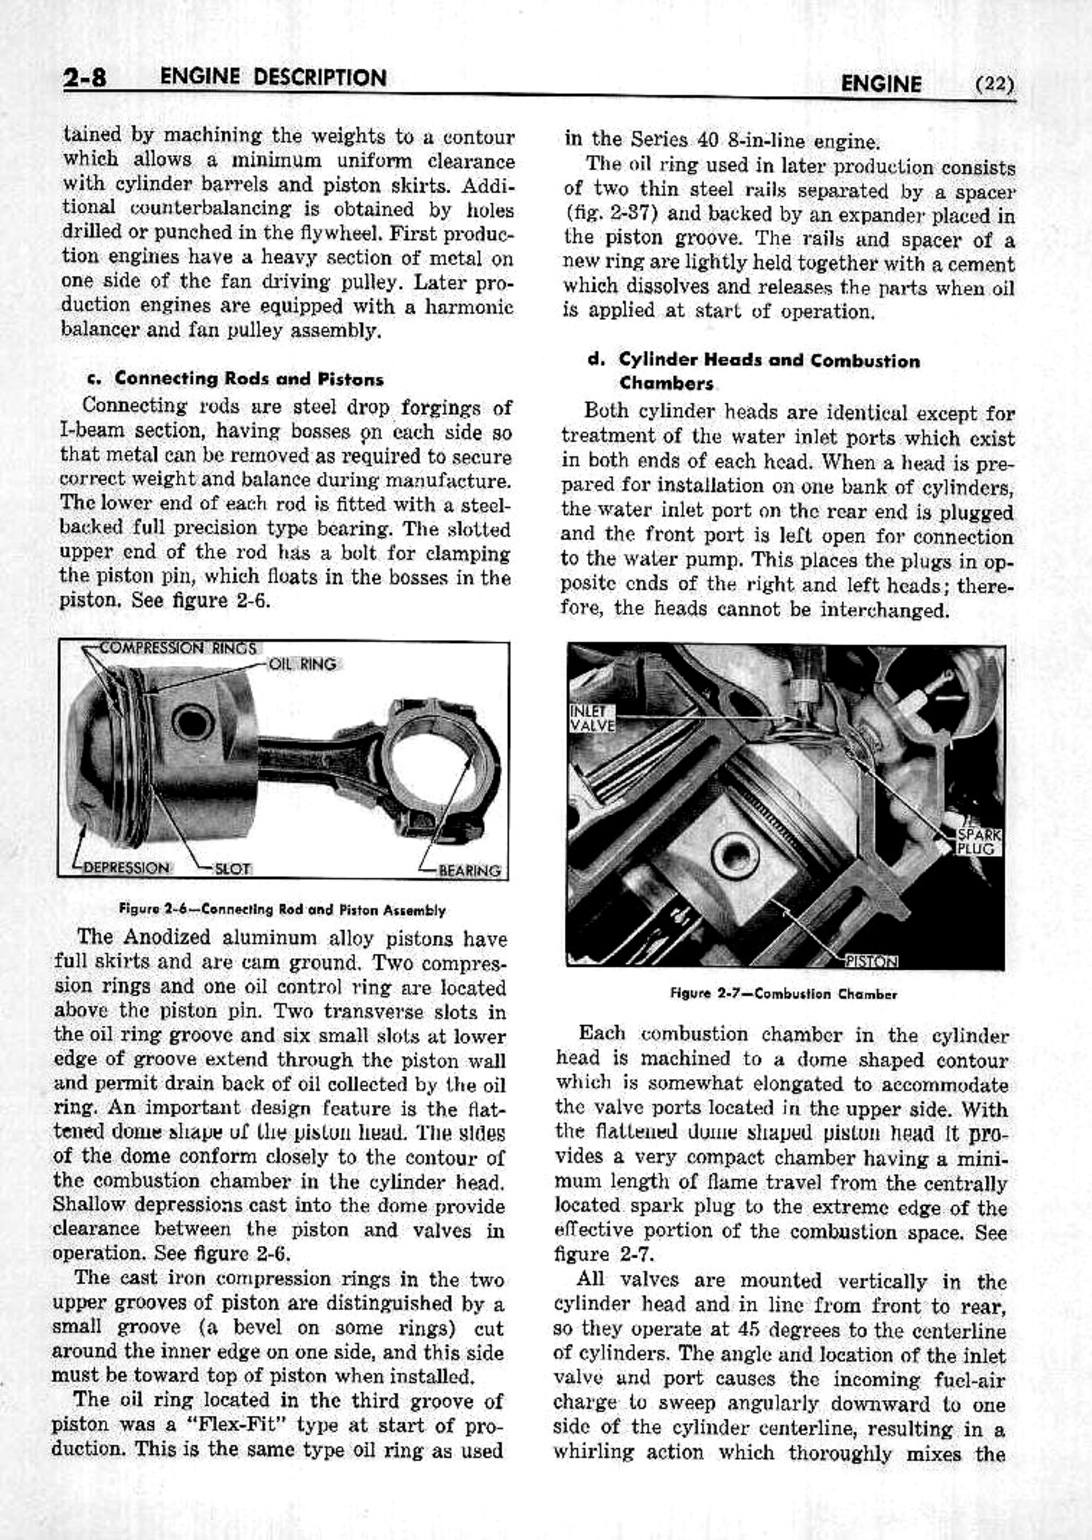 n_03 1953 Buick Shop Manual - Engine-008-008.jpg